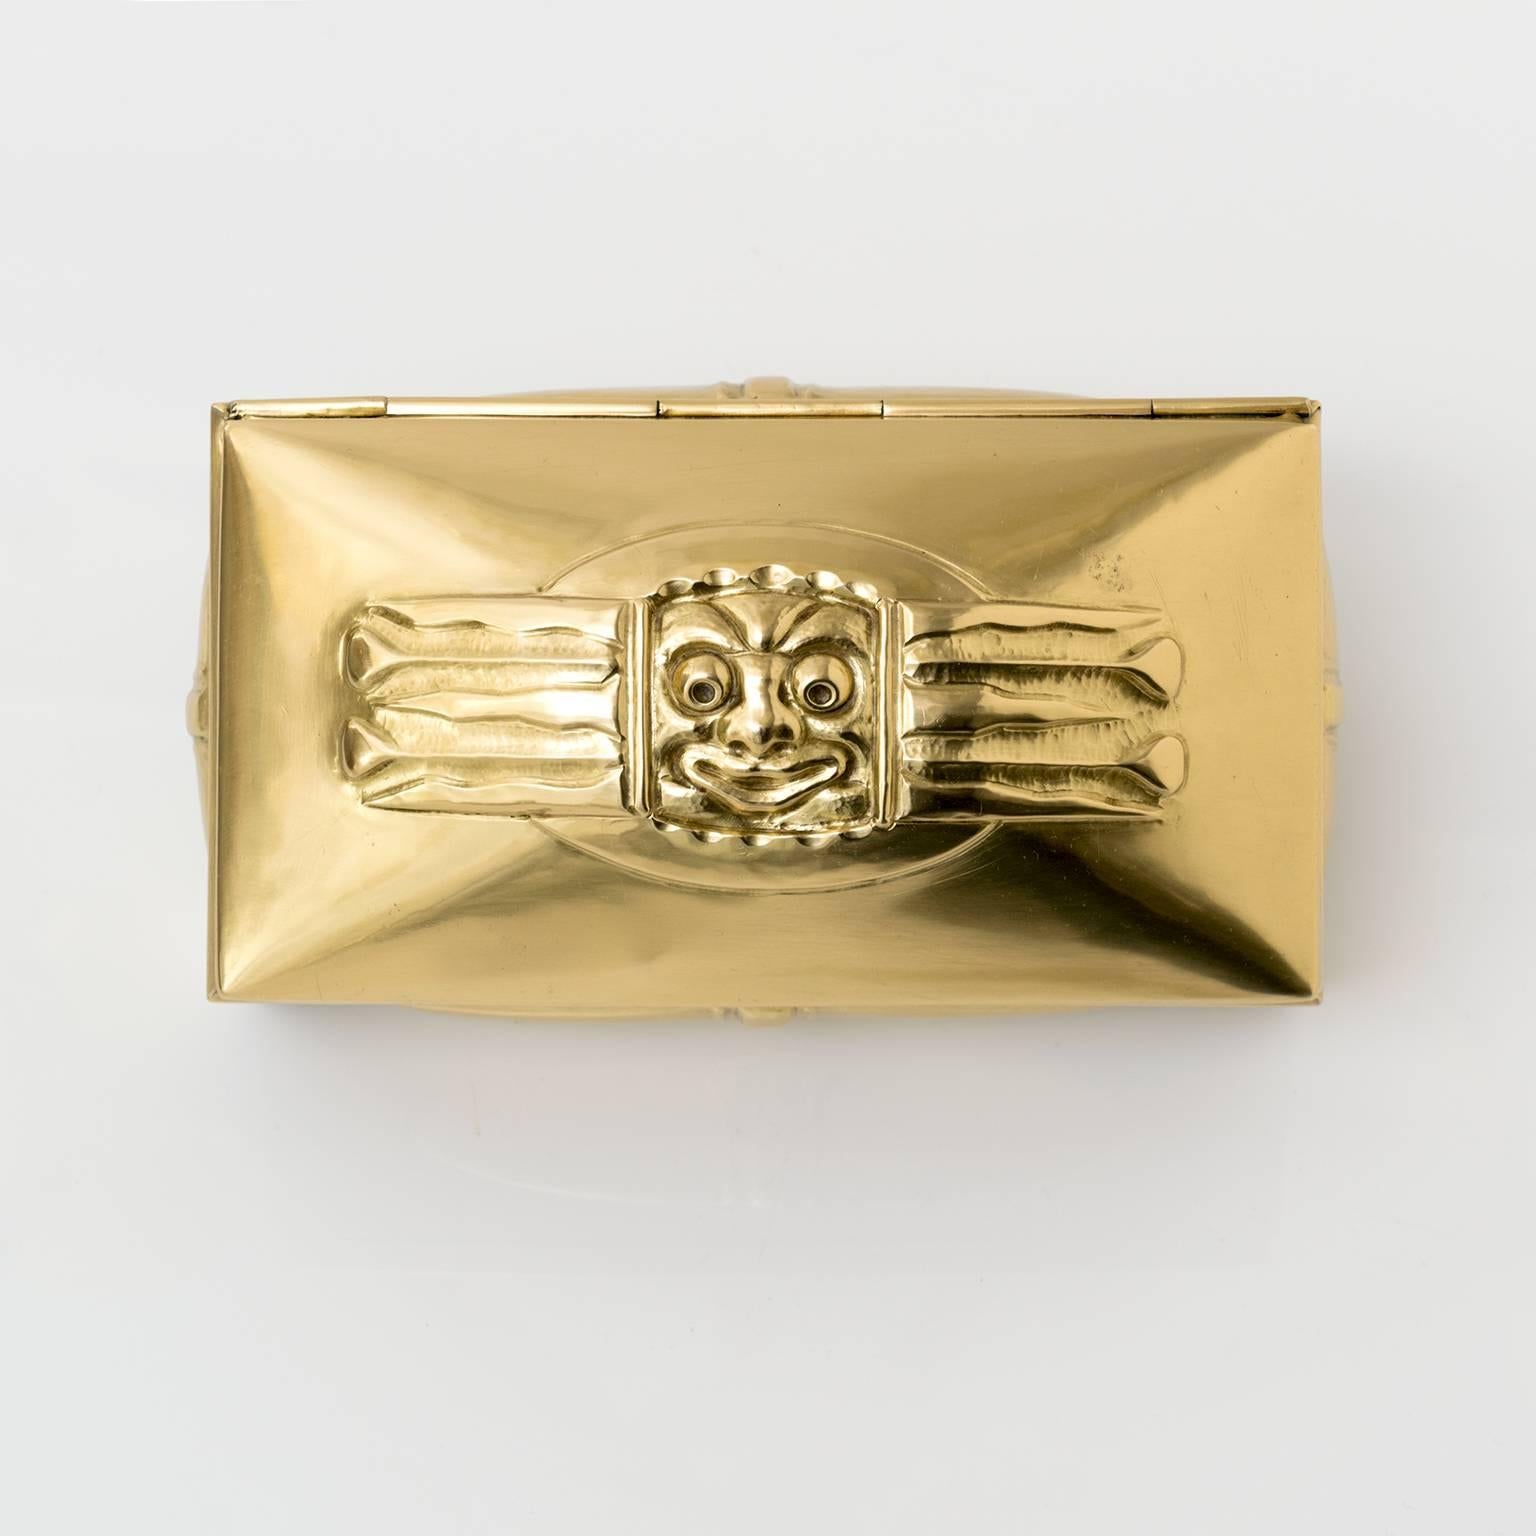 20th Century Scandinavian Modern, Art Nouveau, Jugend polished  Brass Box with face 